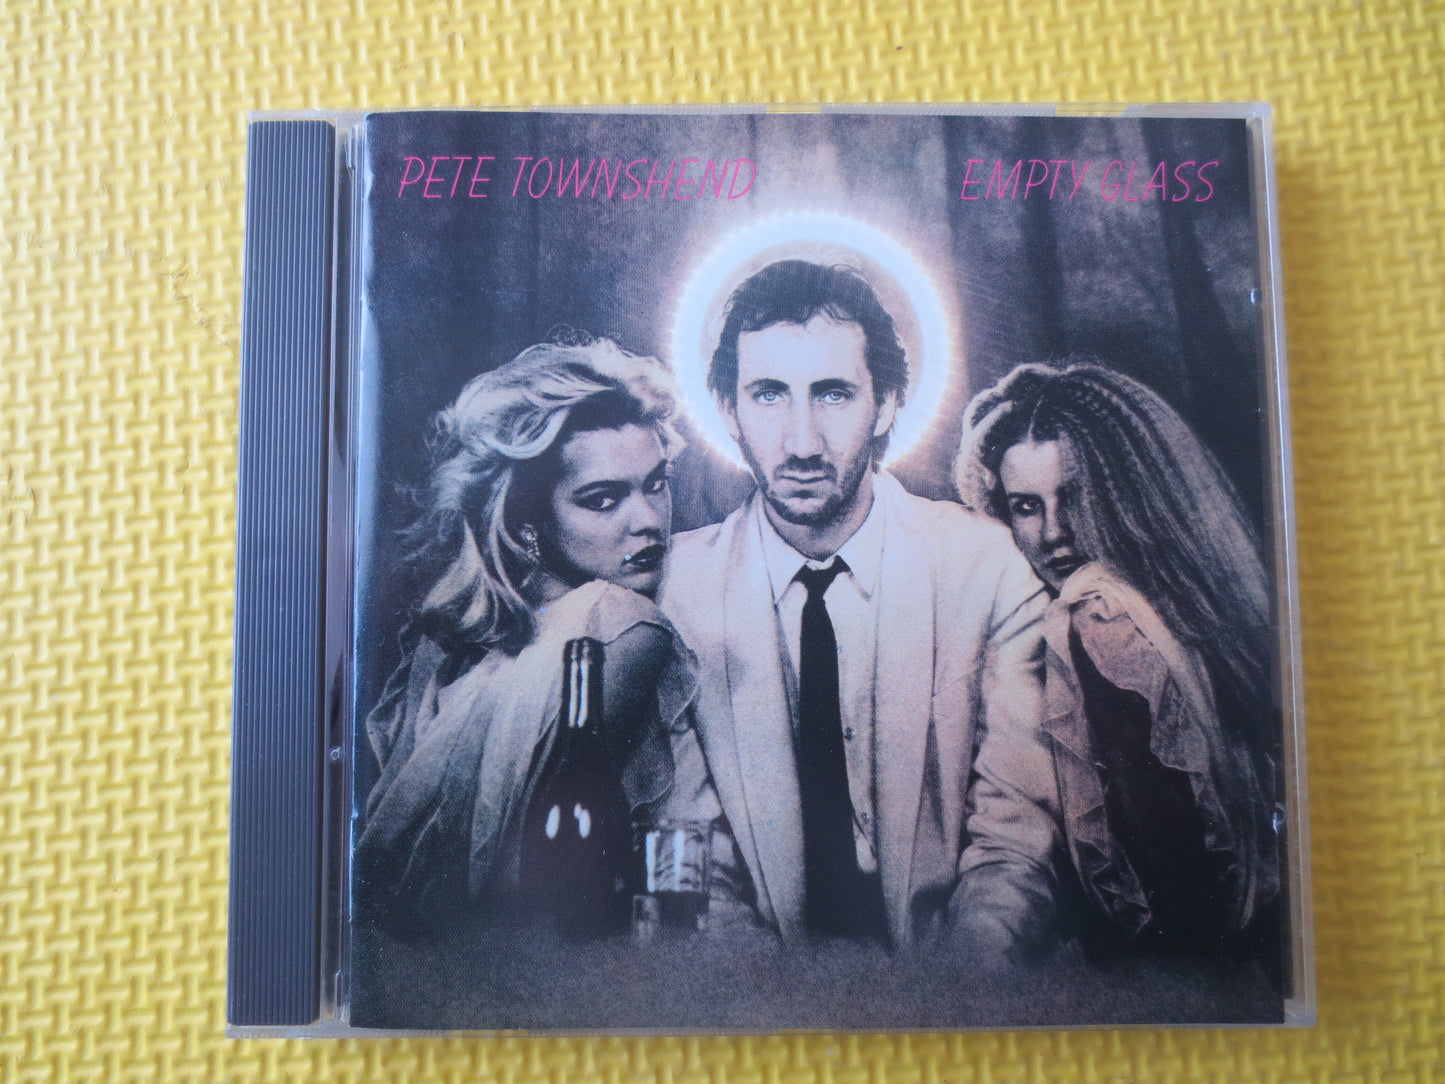 PETE TOWNSHEND, Empty GLASS, Pete Townshend Cd, Music Cd, Cd Music, The Who Cd, Rock Music Cd, Rock Cds, cds, 1986 Compact Disc